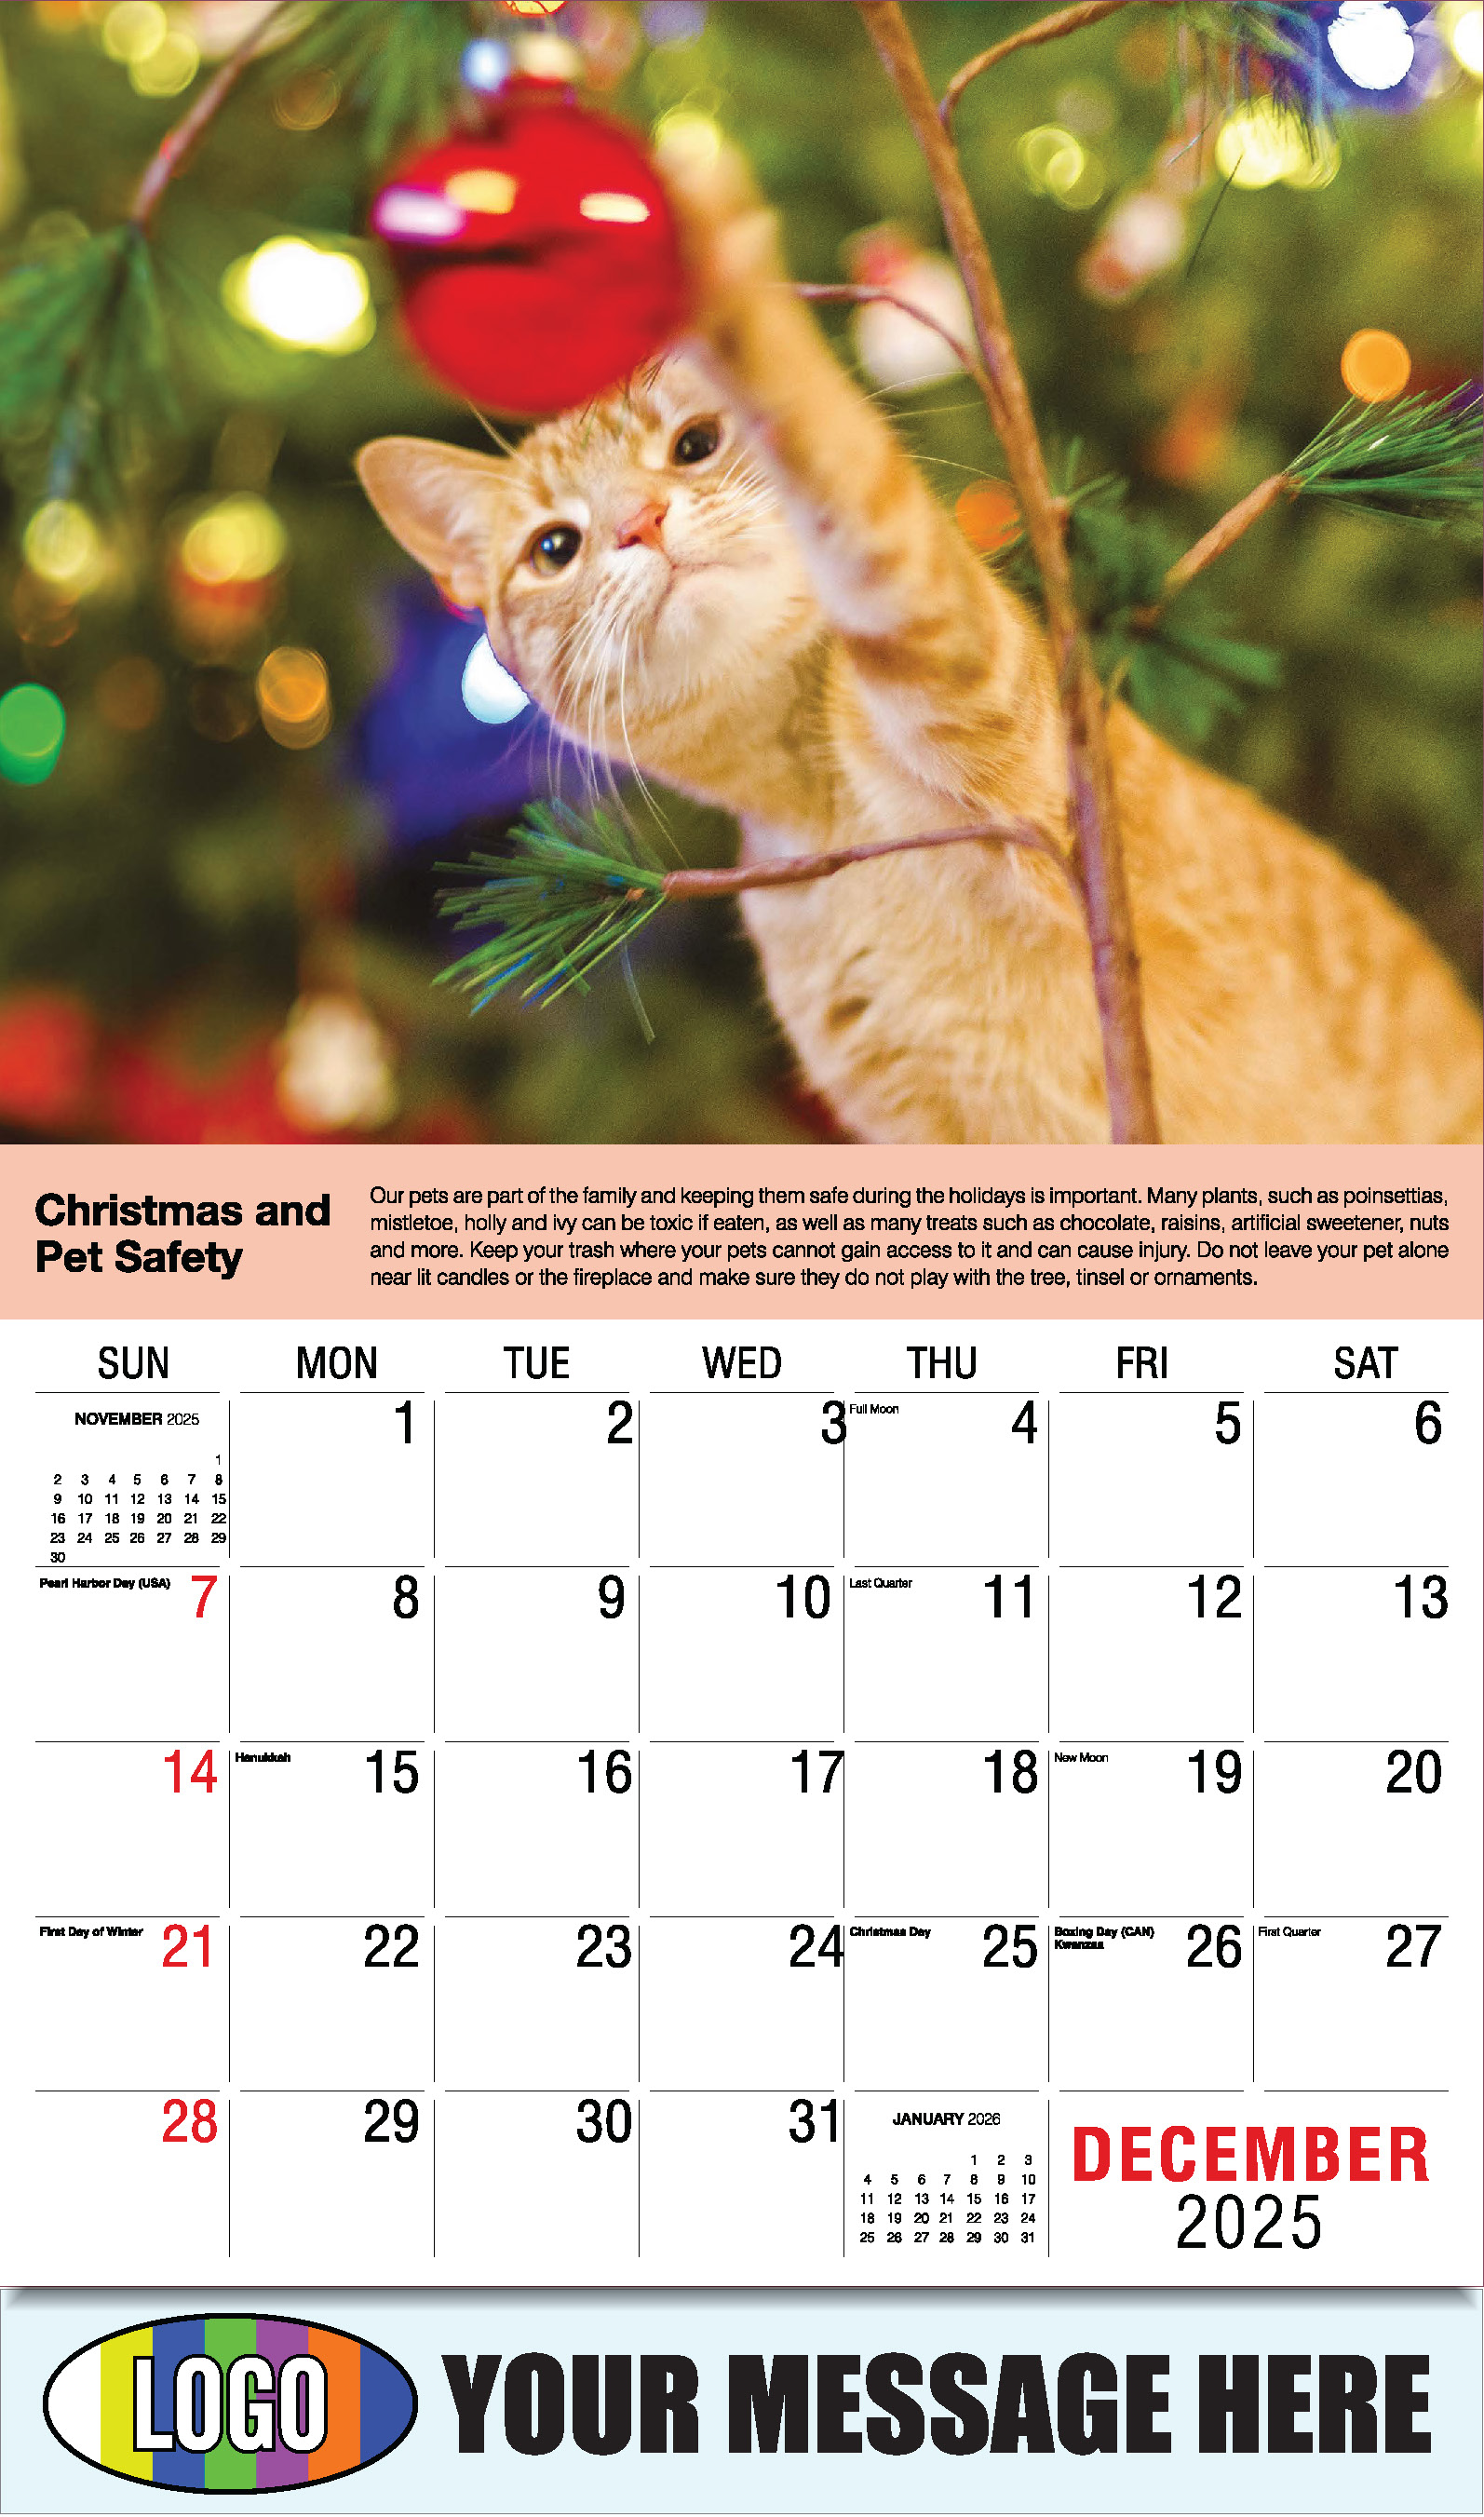 Health Tips 2025 Business Promo Wall Calendar - December